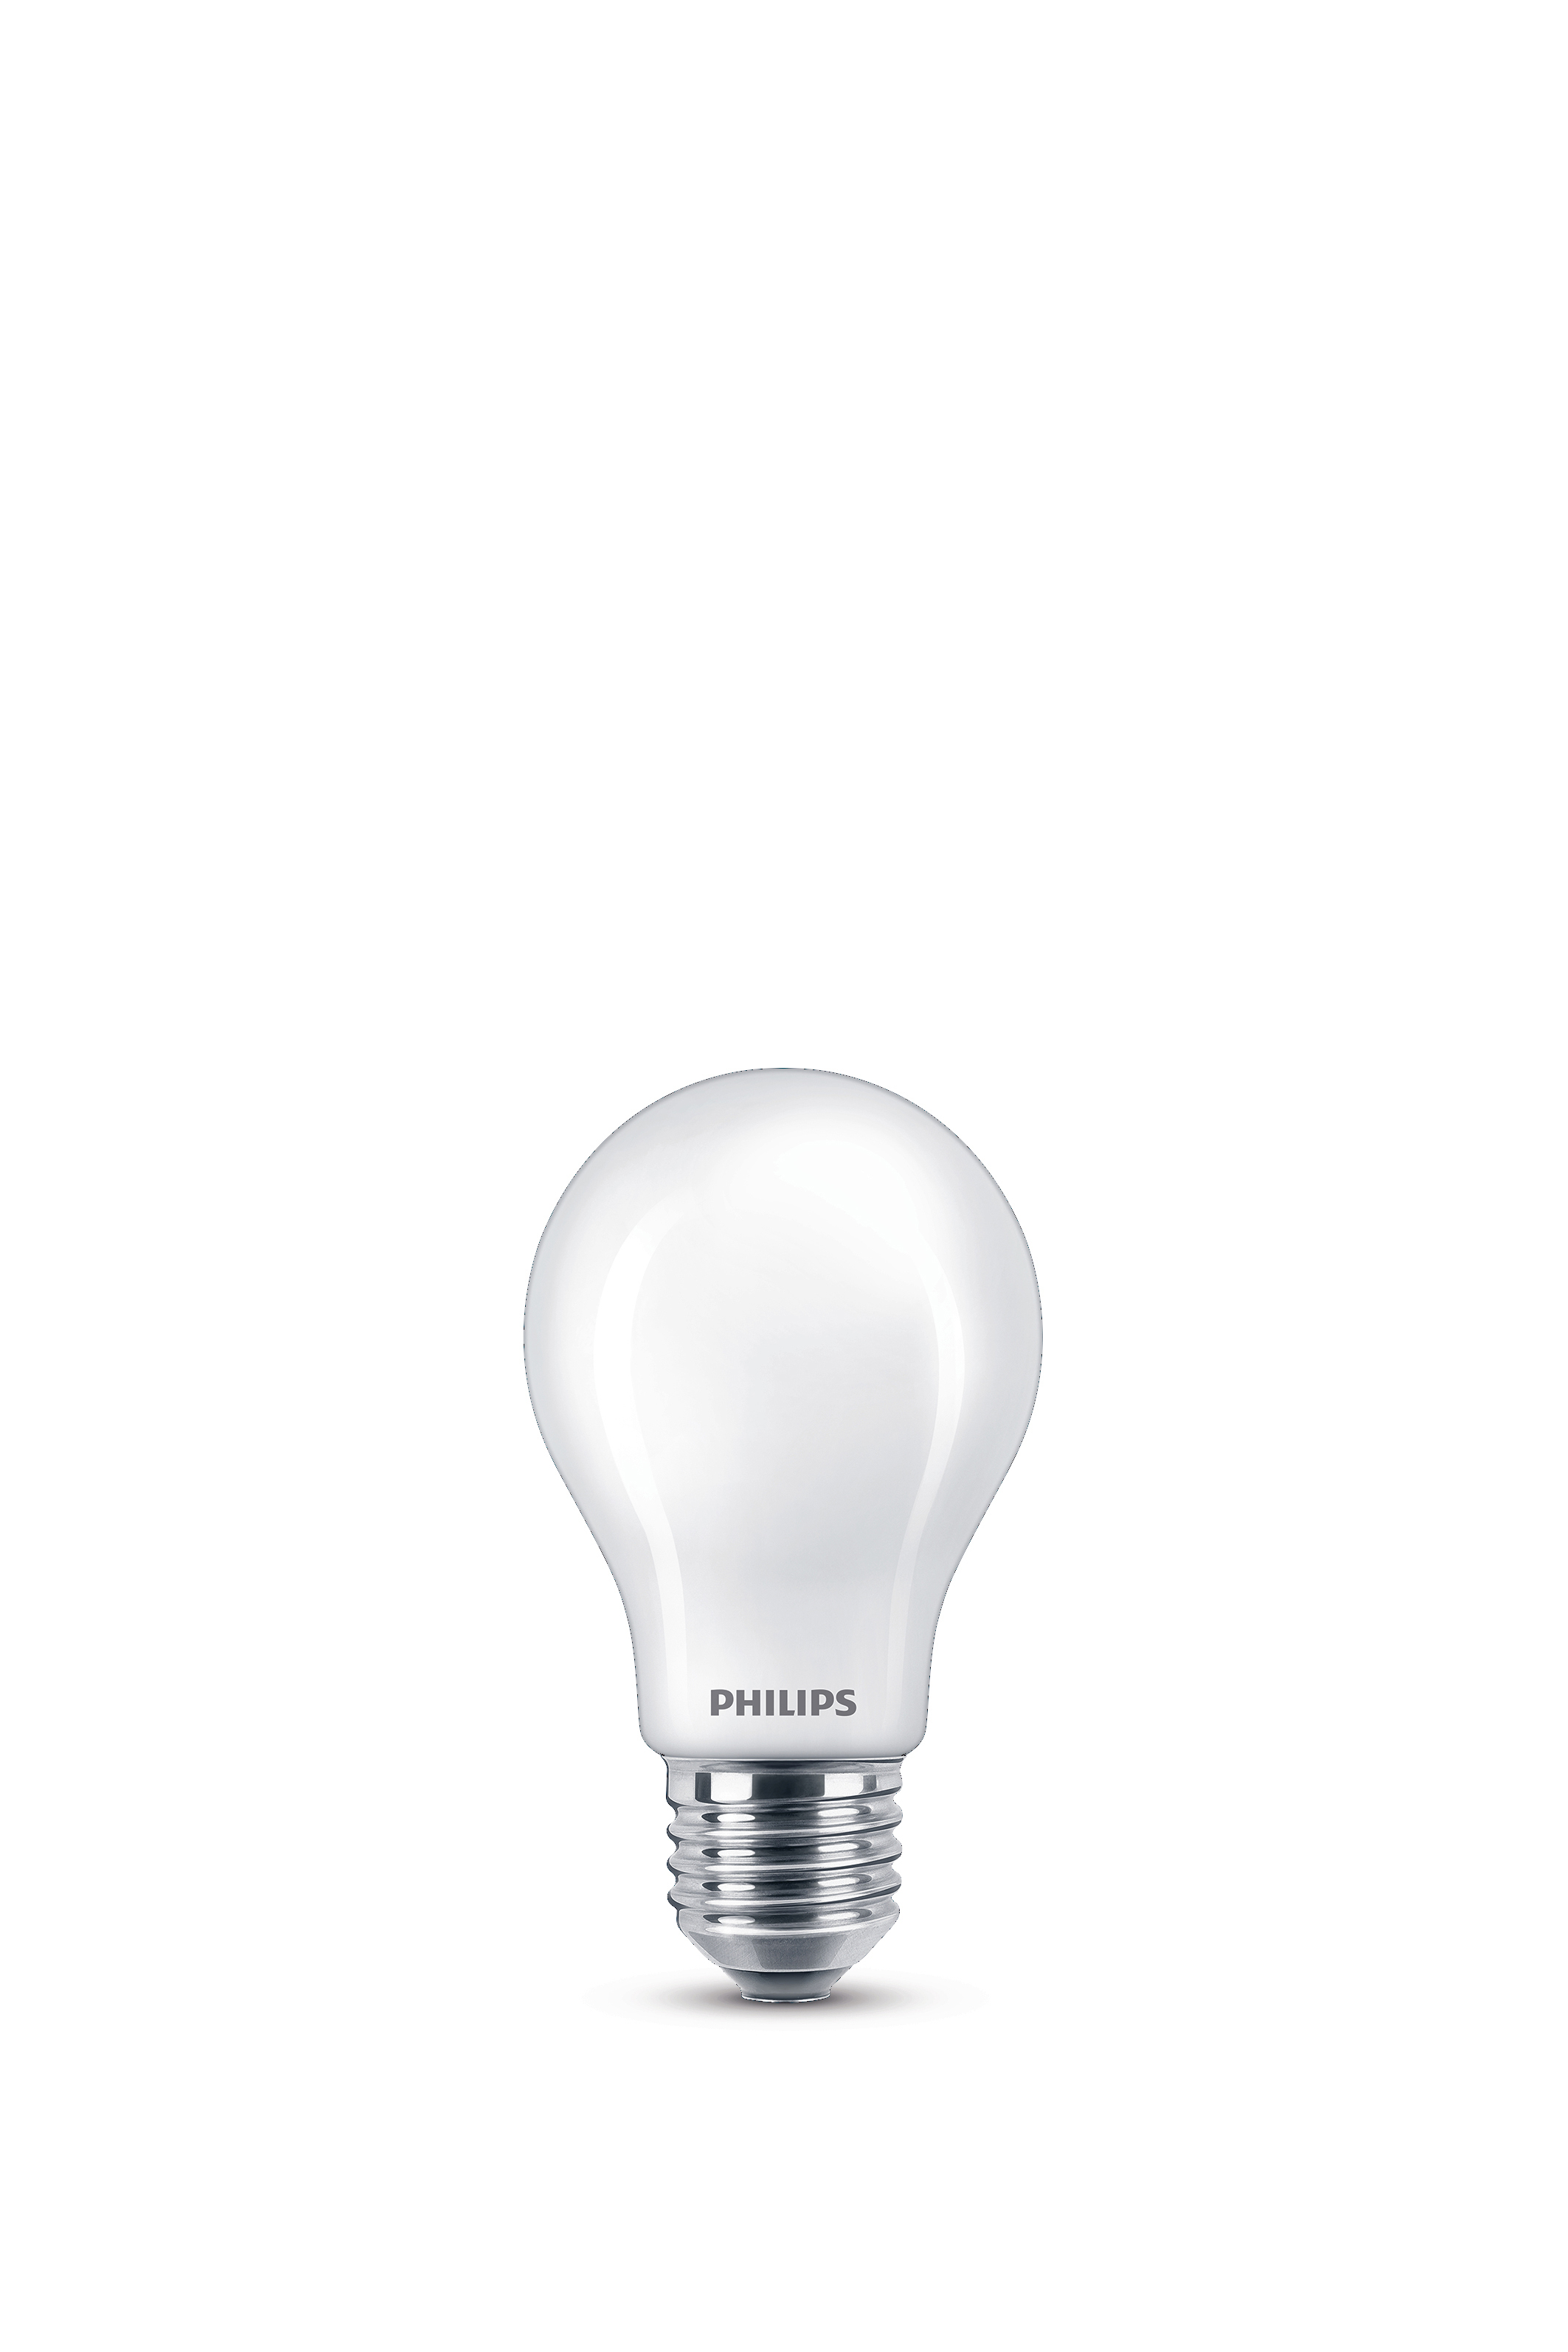 PHILIPS LEDclassic Lampe neutralweiß 60W LED Lampe ersetzt